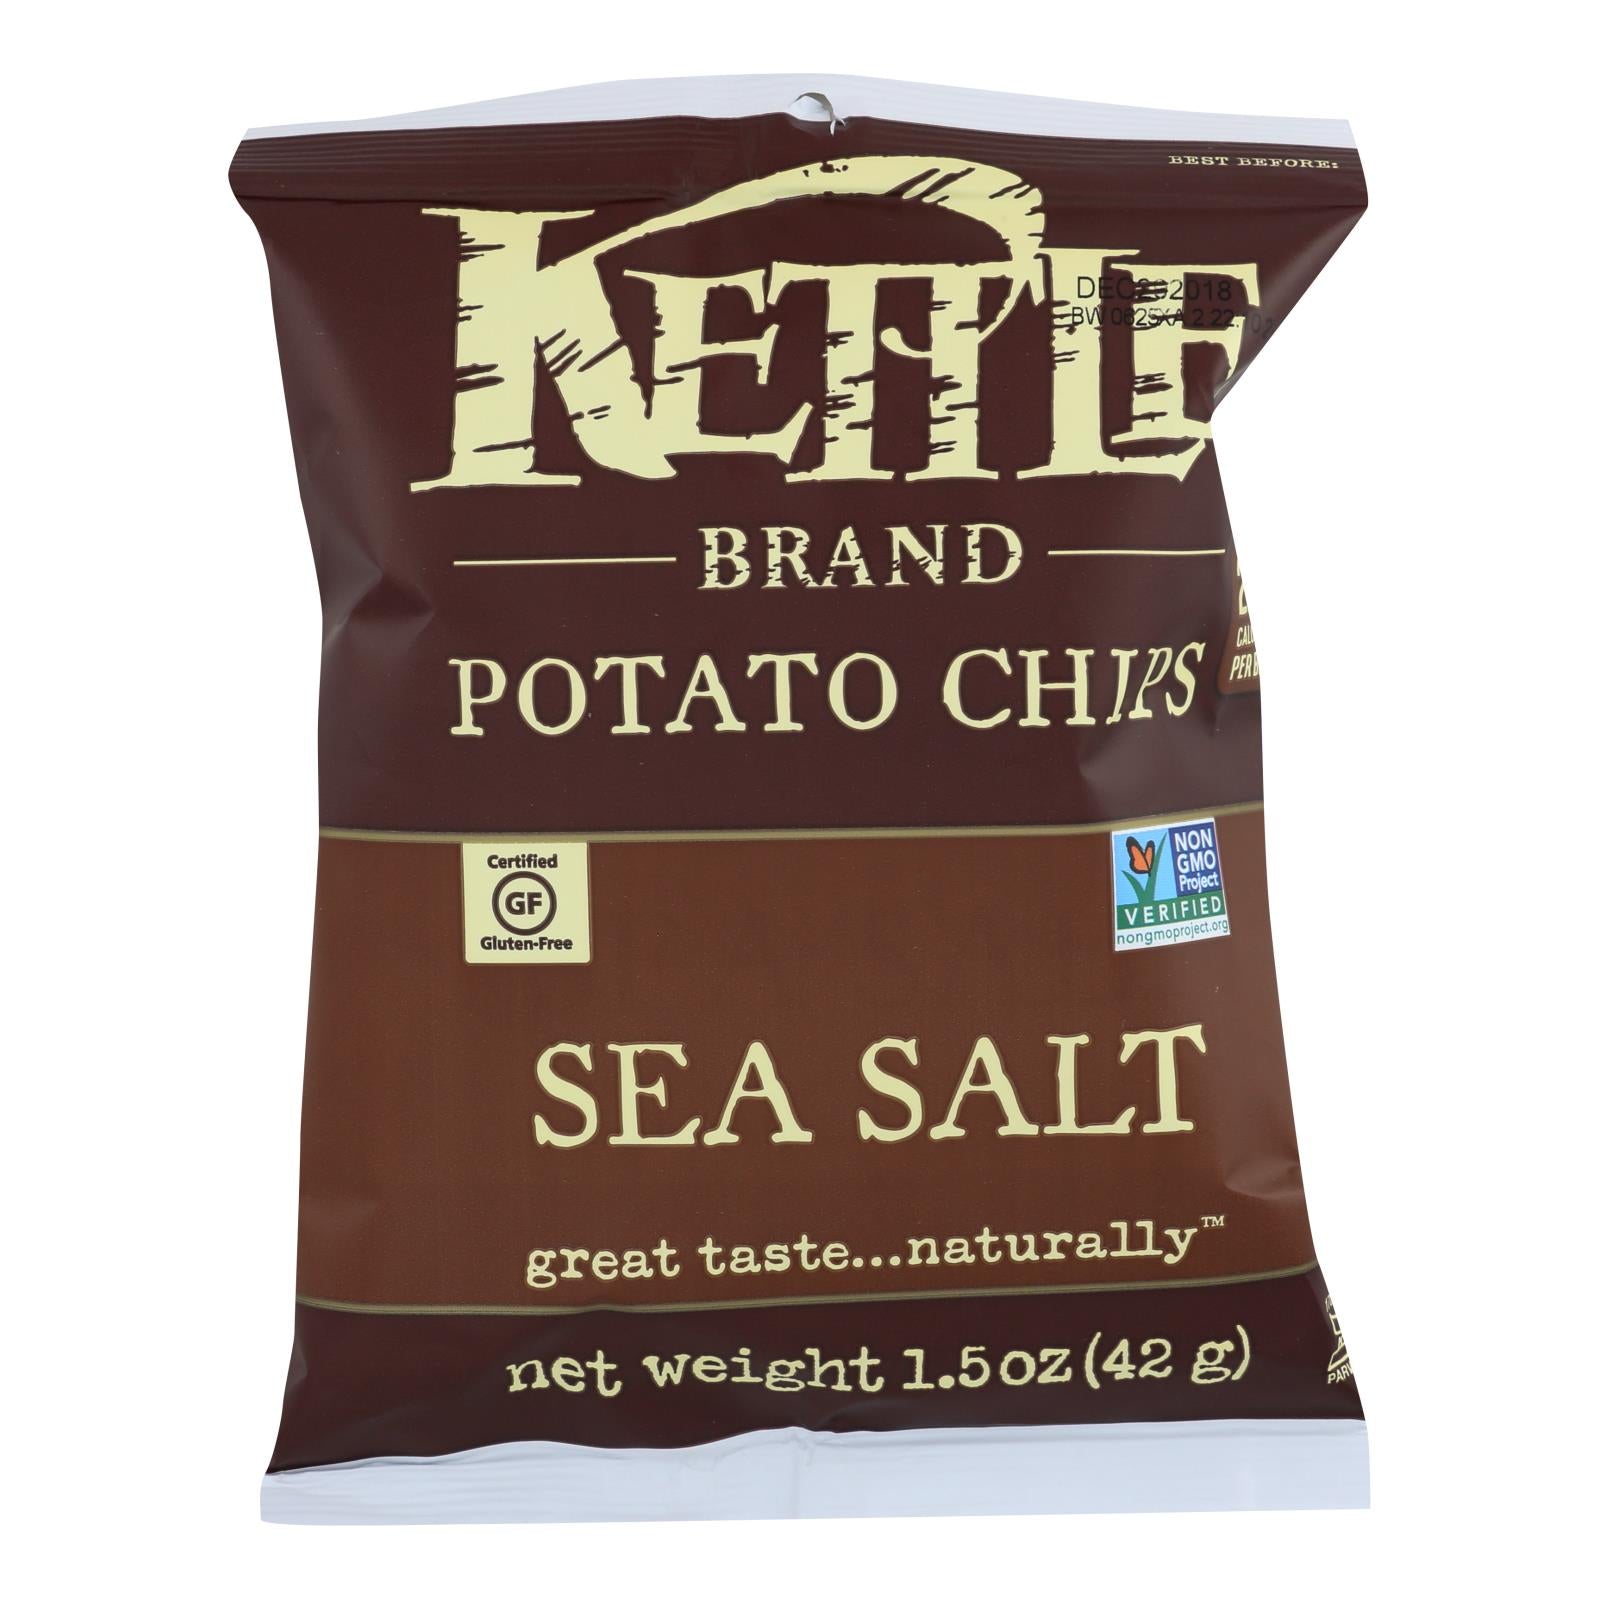 Kettle Brand Potato Chips - Sea Salt - 1.5 Oz - Case Of 24